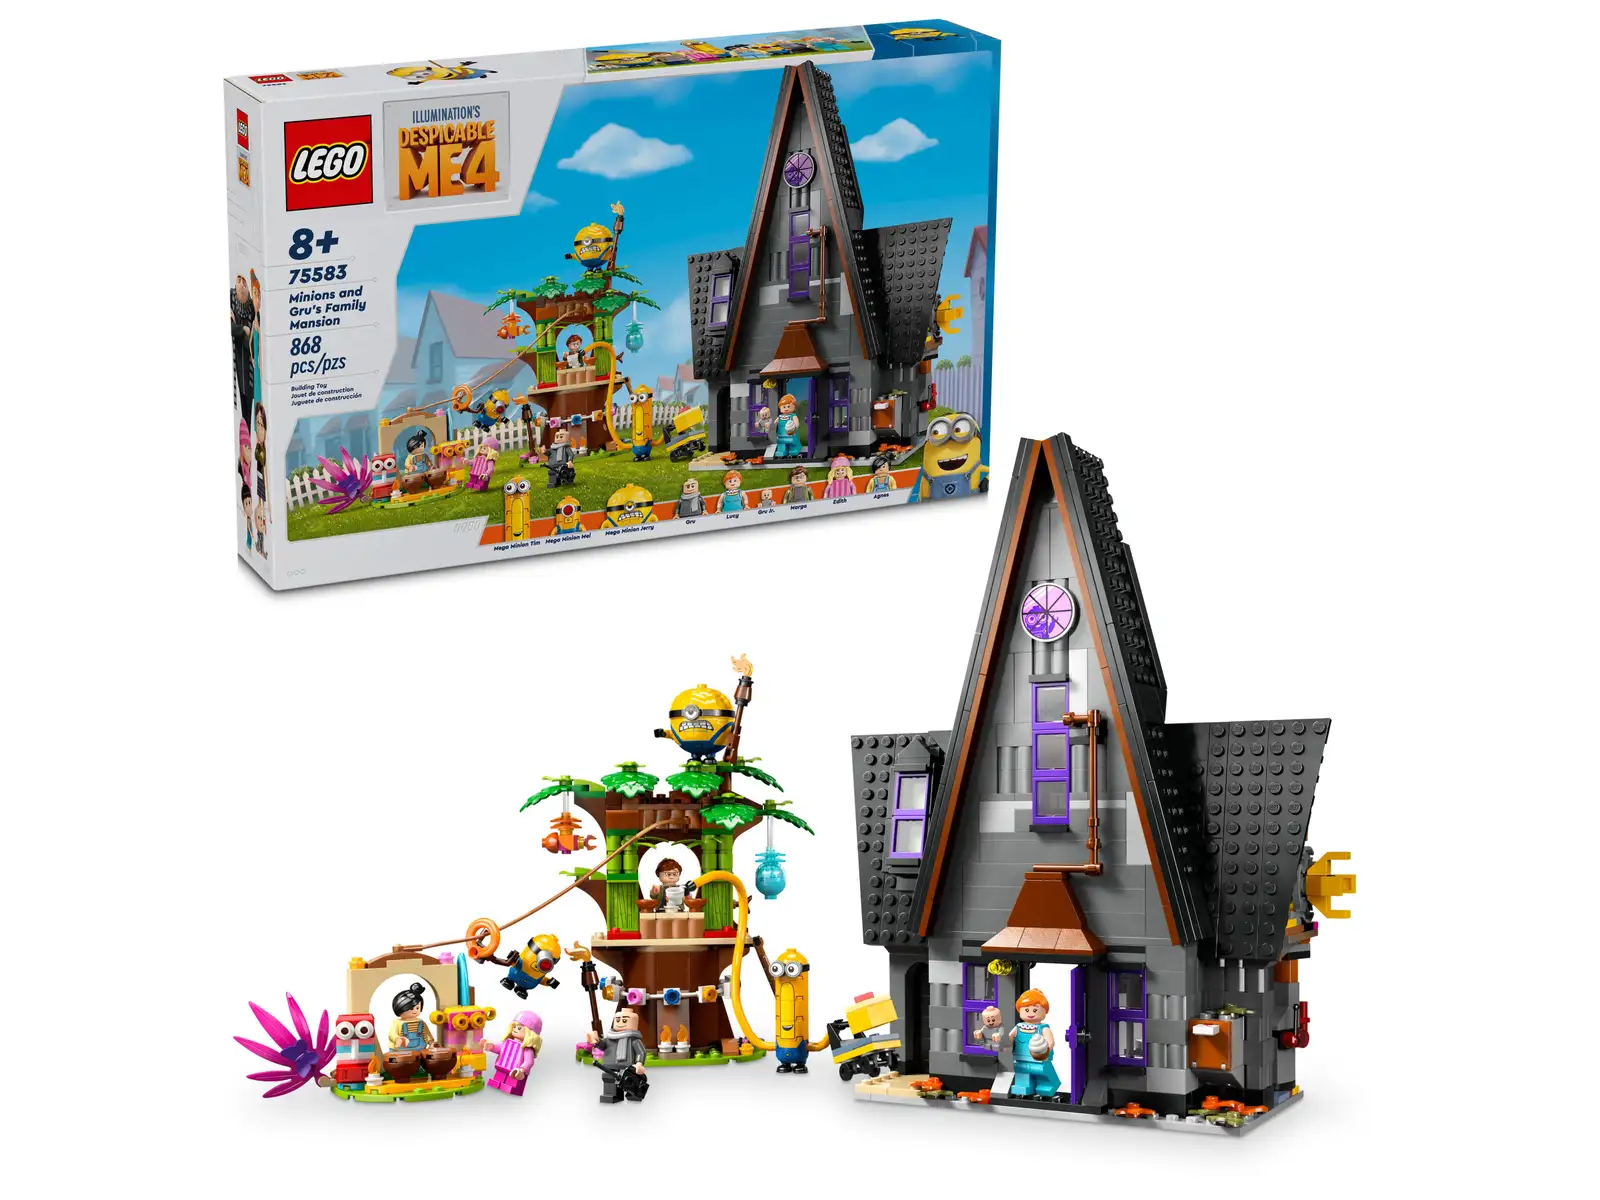 LEGO 75583 Huset til Minions og Gru 75583 - Lego Minions